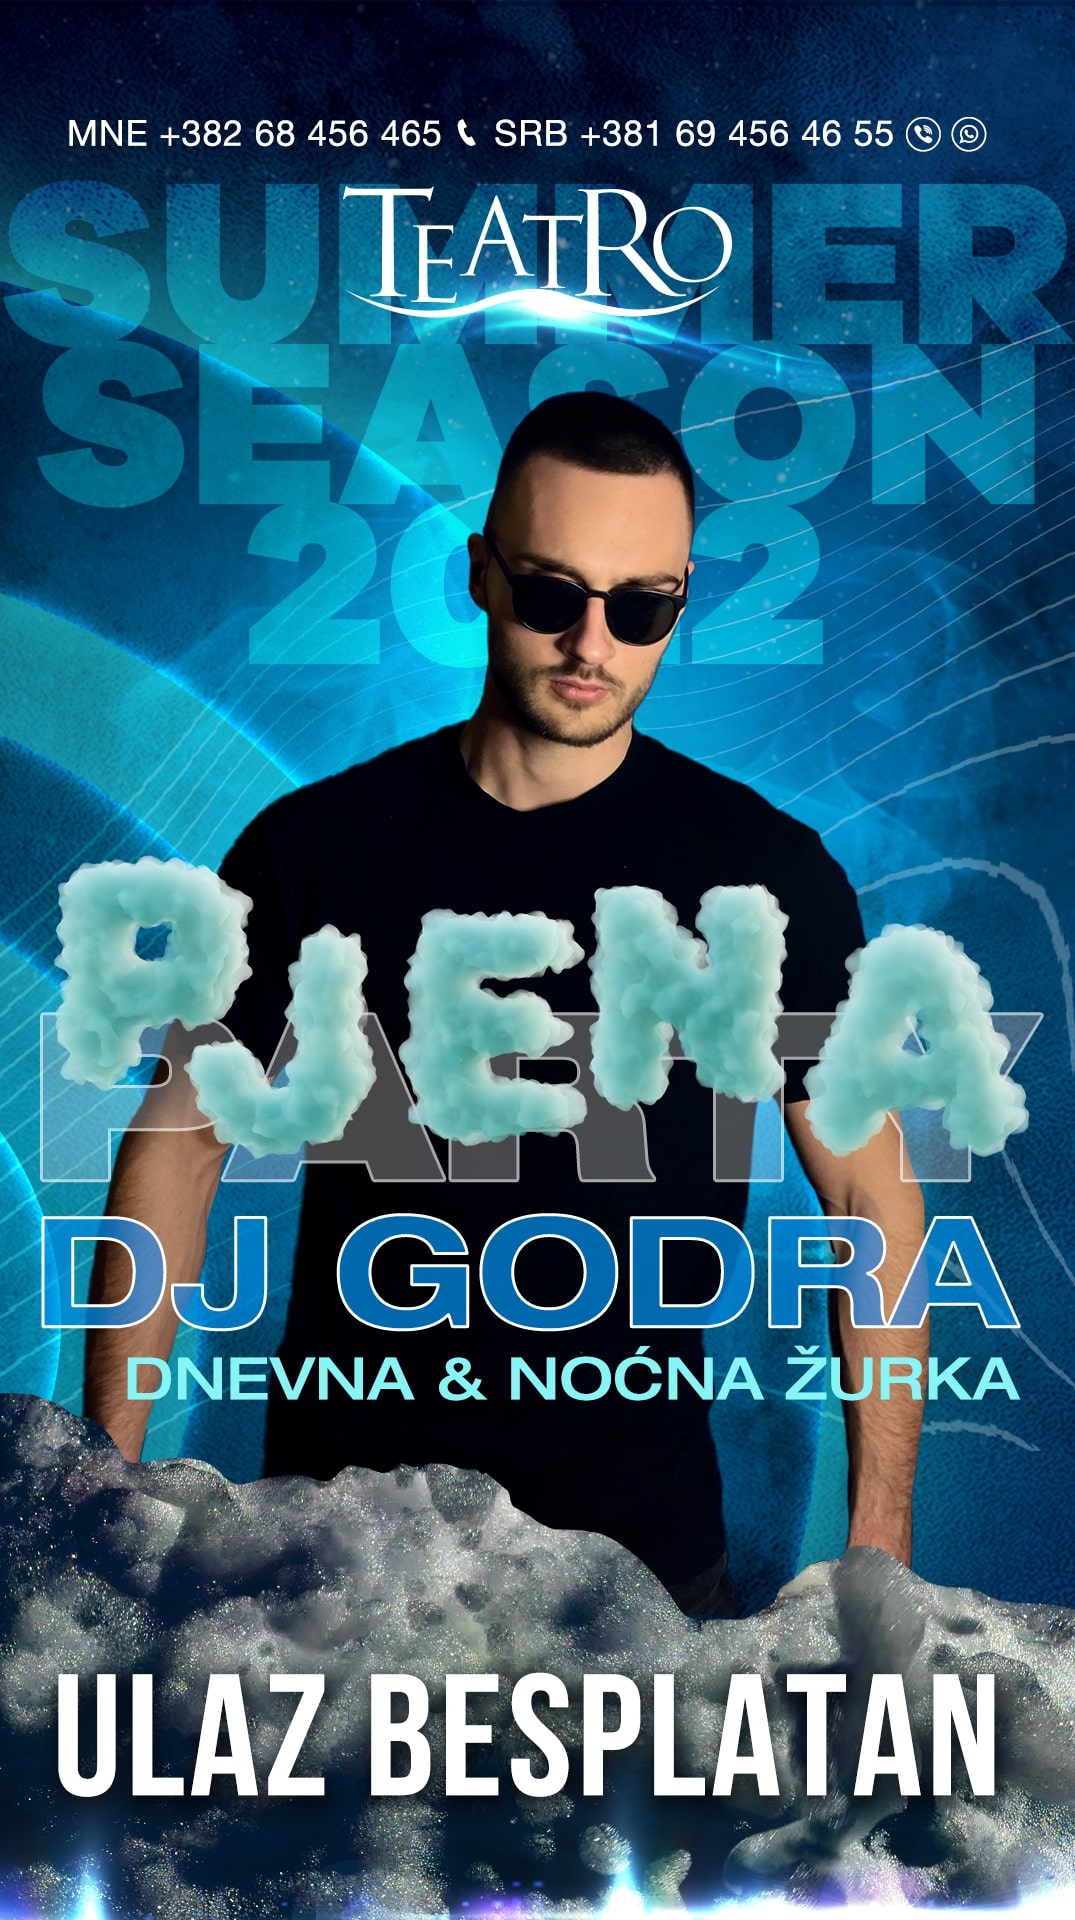 Pjena Party / DJ Godra